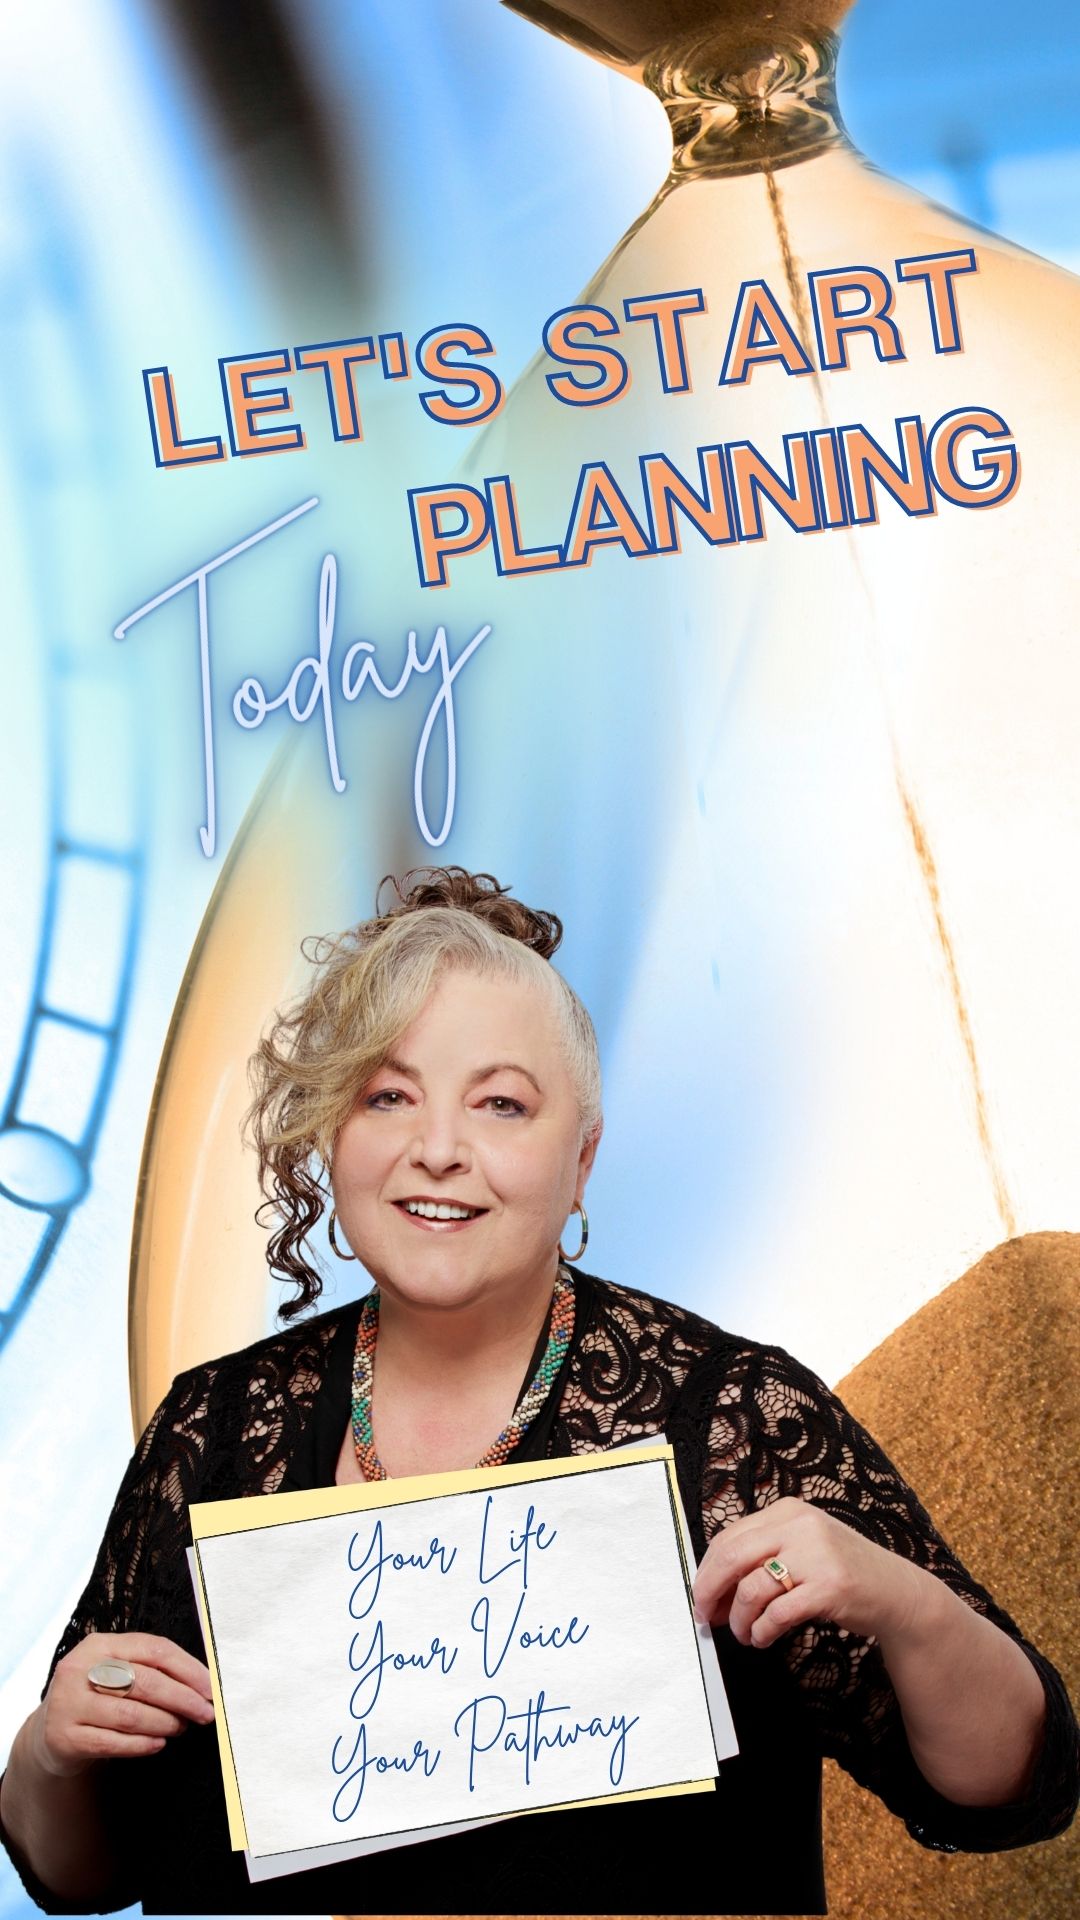 lets start planning - end of life planning